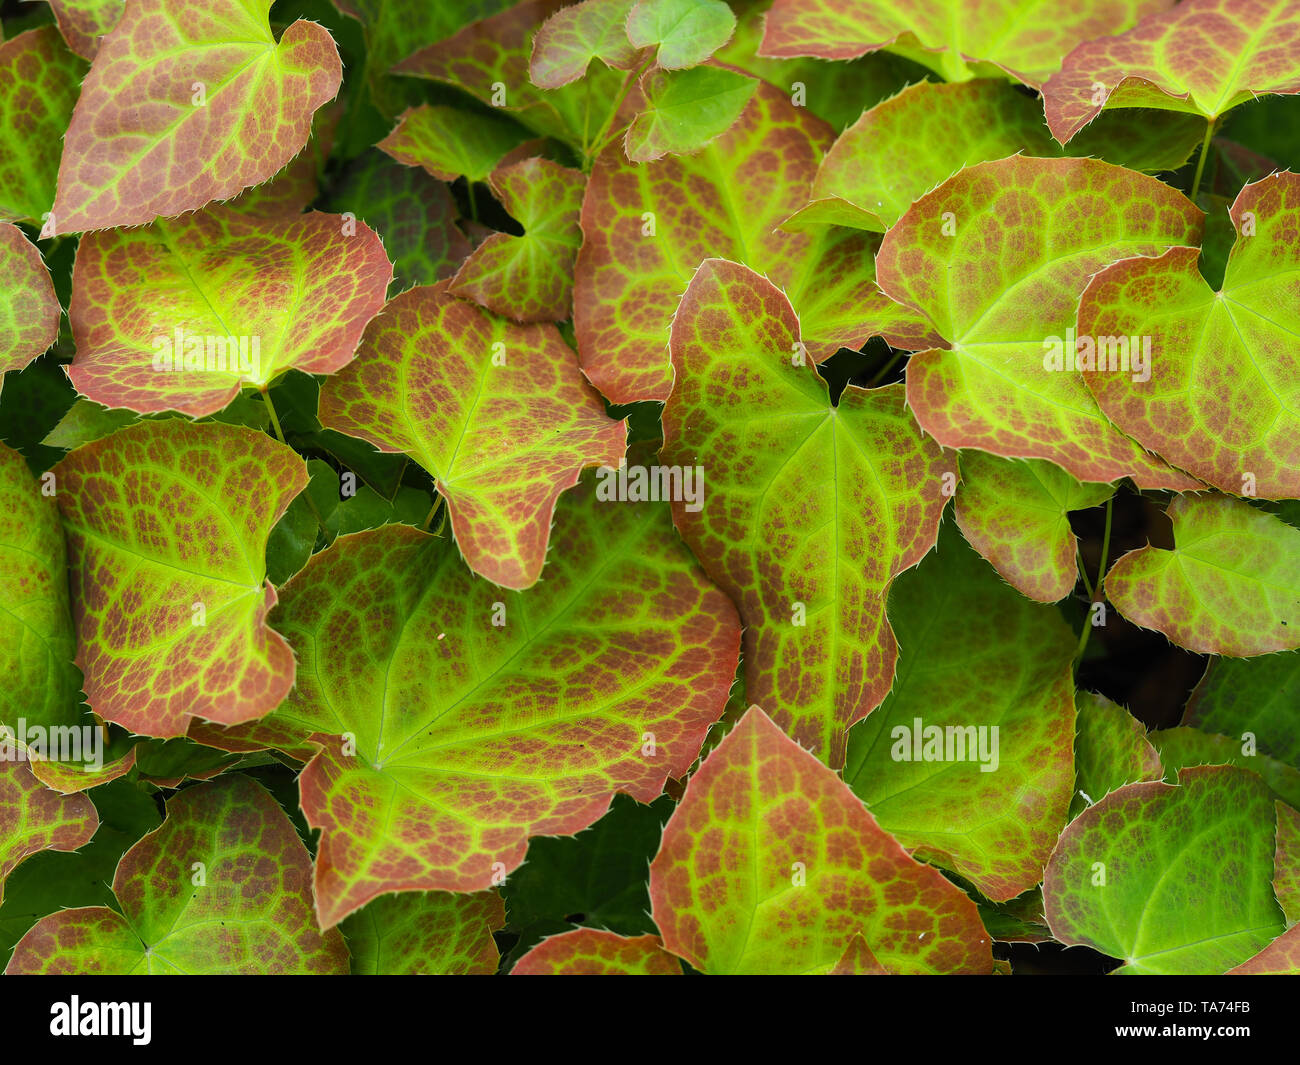 Colourful leaves of a barrenwort (Epimedium versicolor) plant Stock Photo